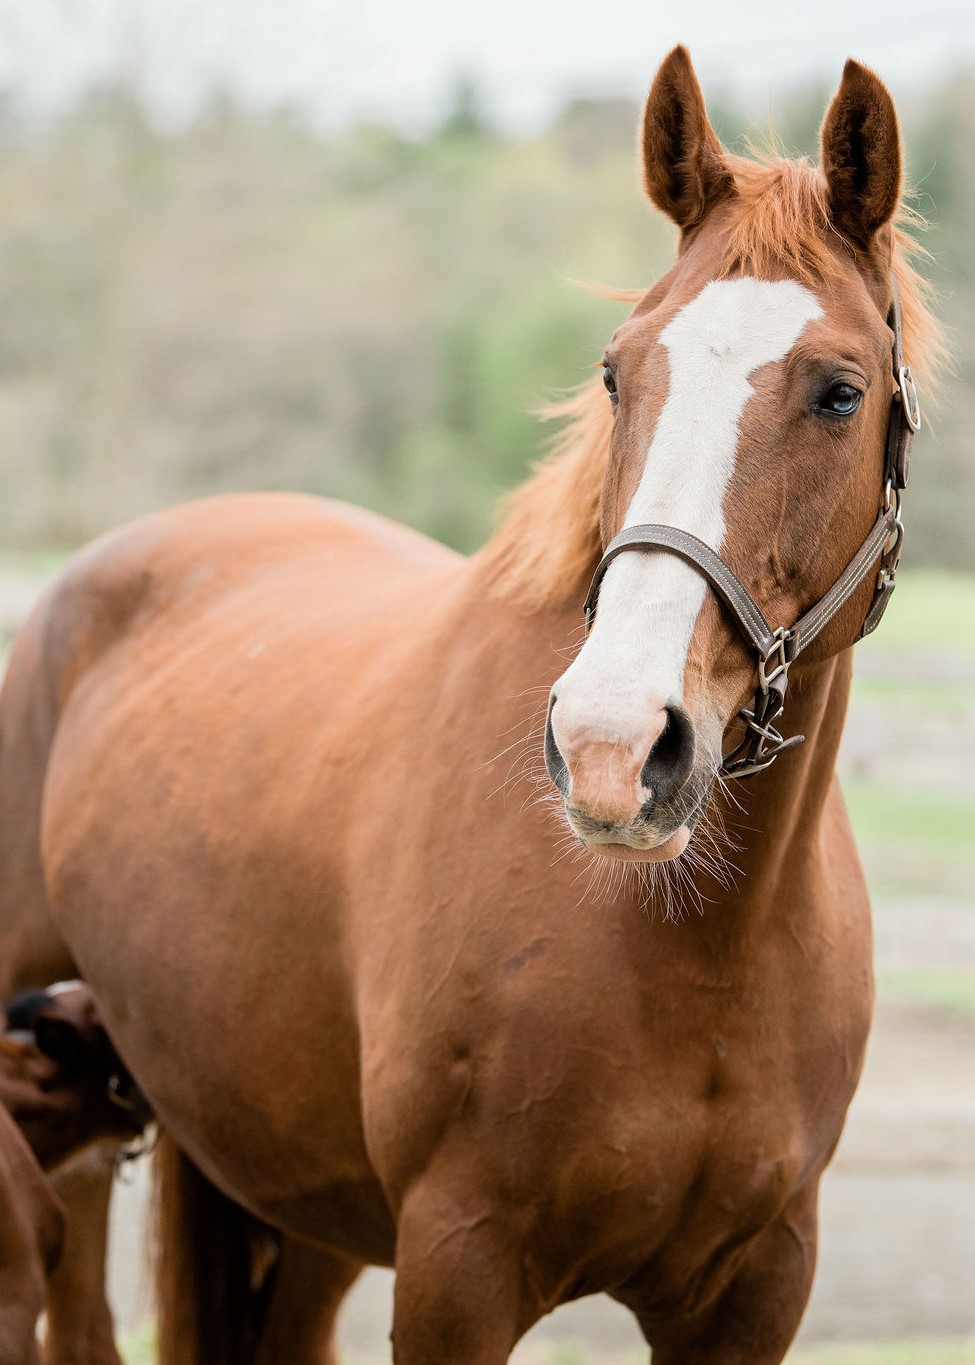 Fante, a light brown broodmare horse